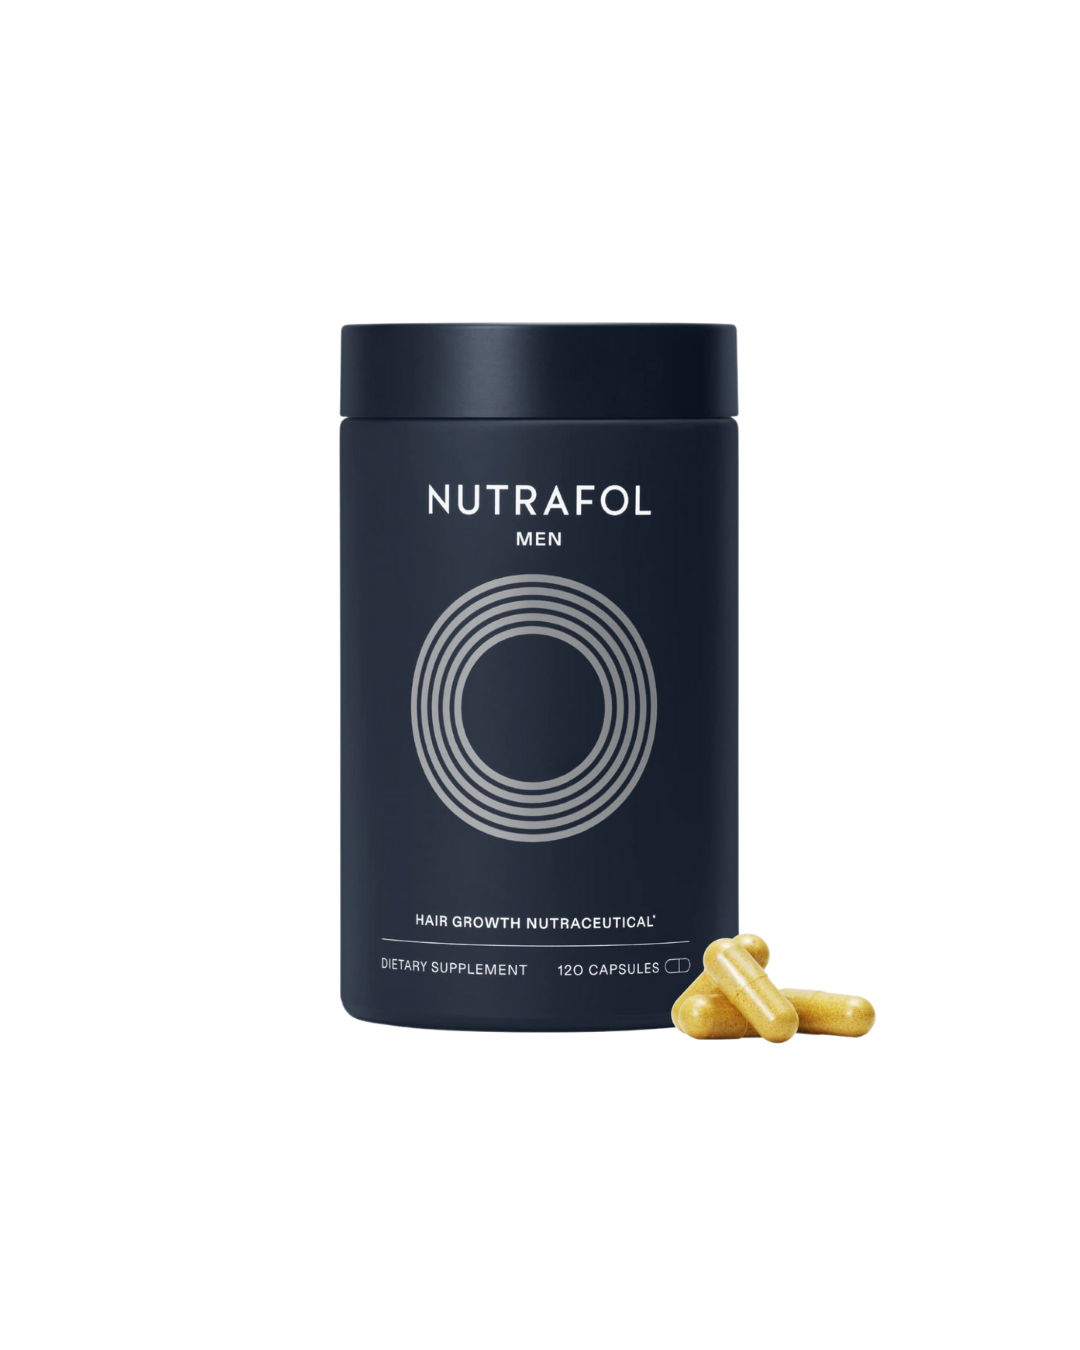 Nutrafol Men Hair Growth Supplements - 3 Month Supply